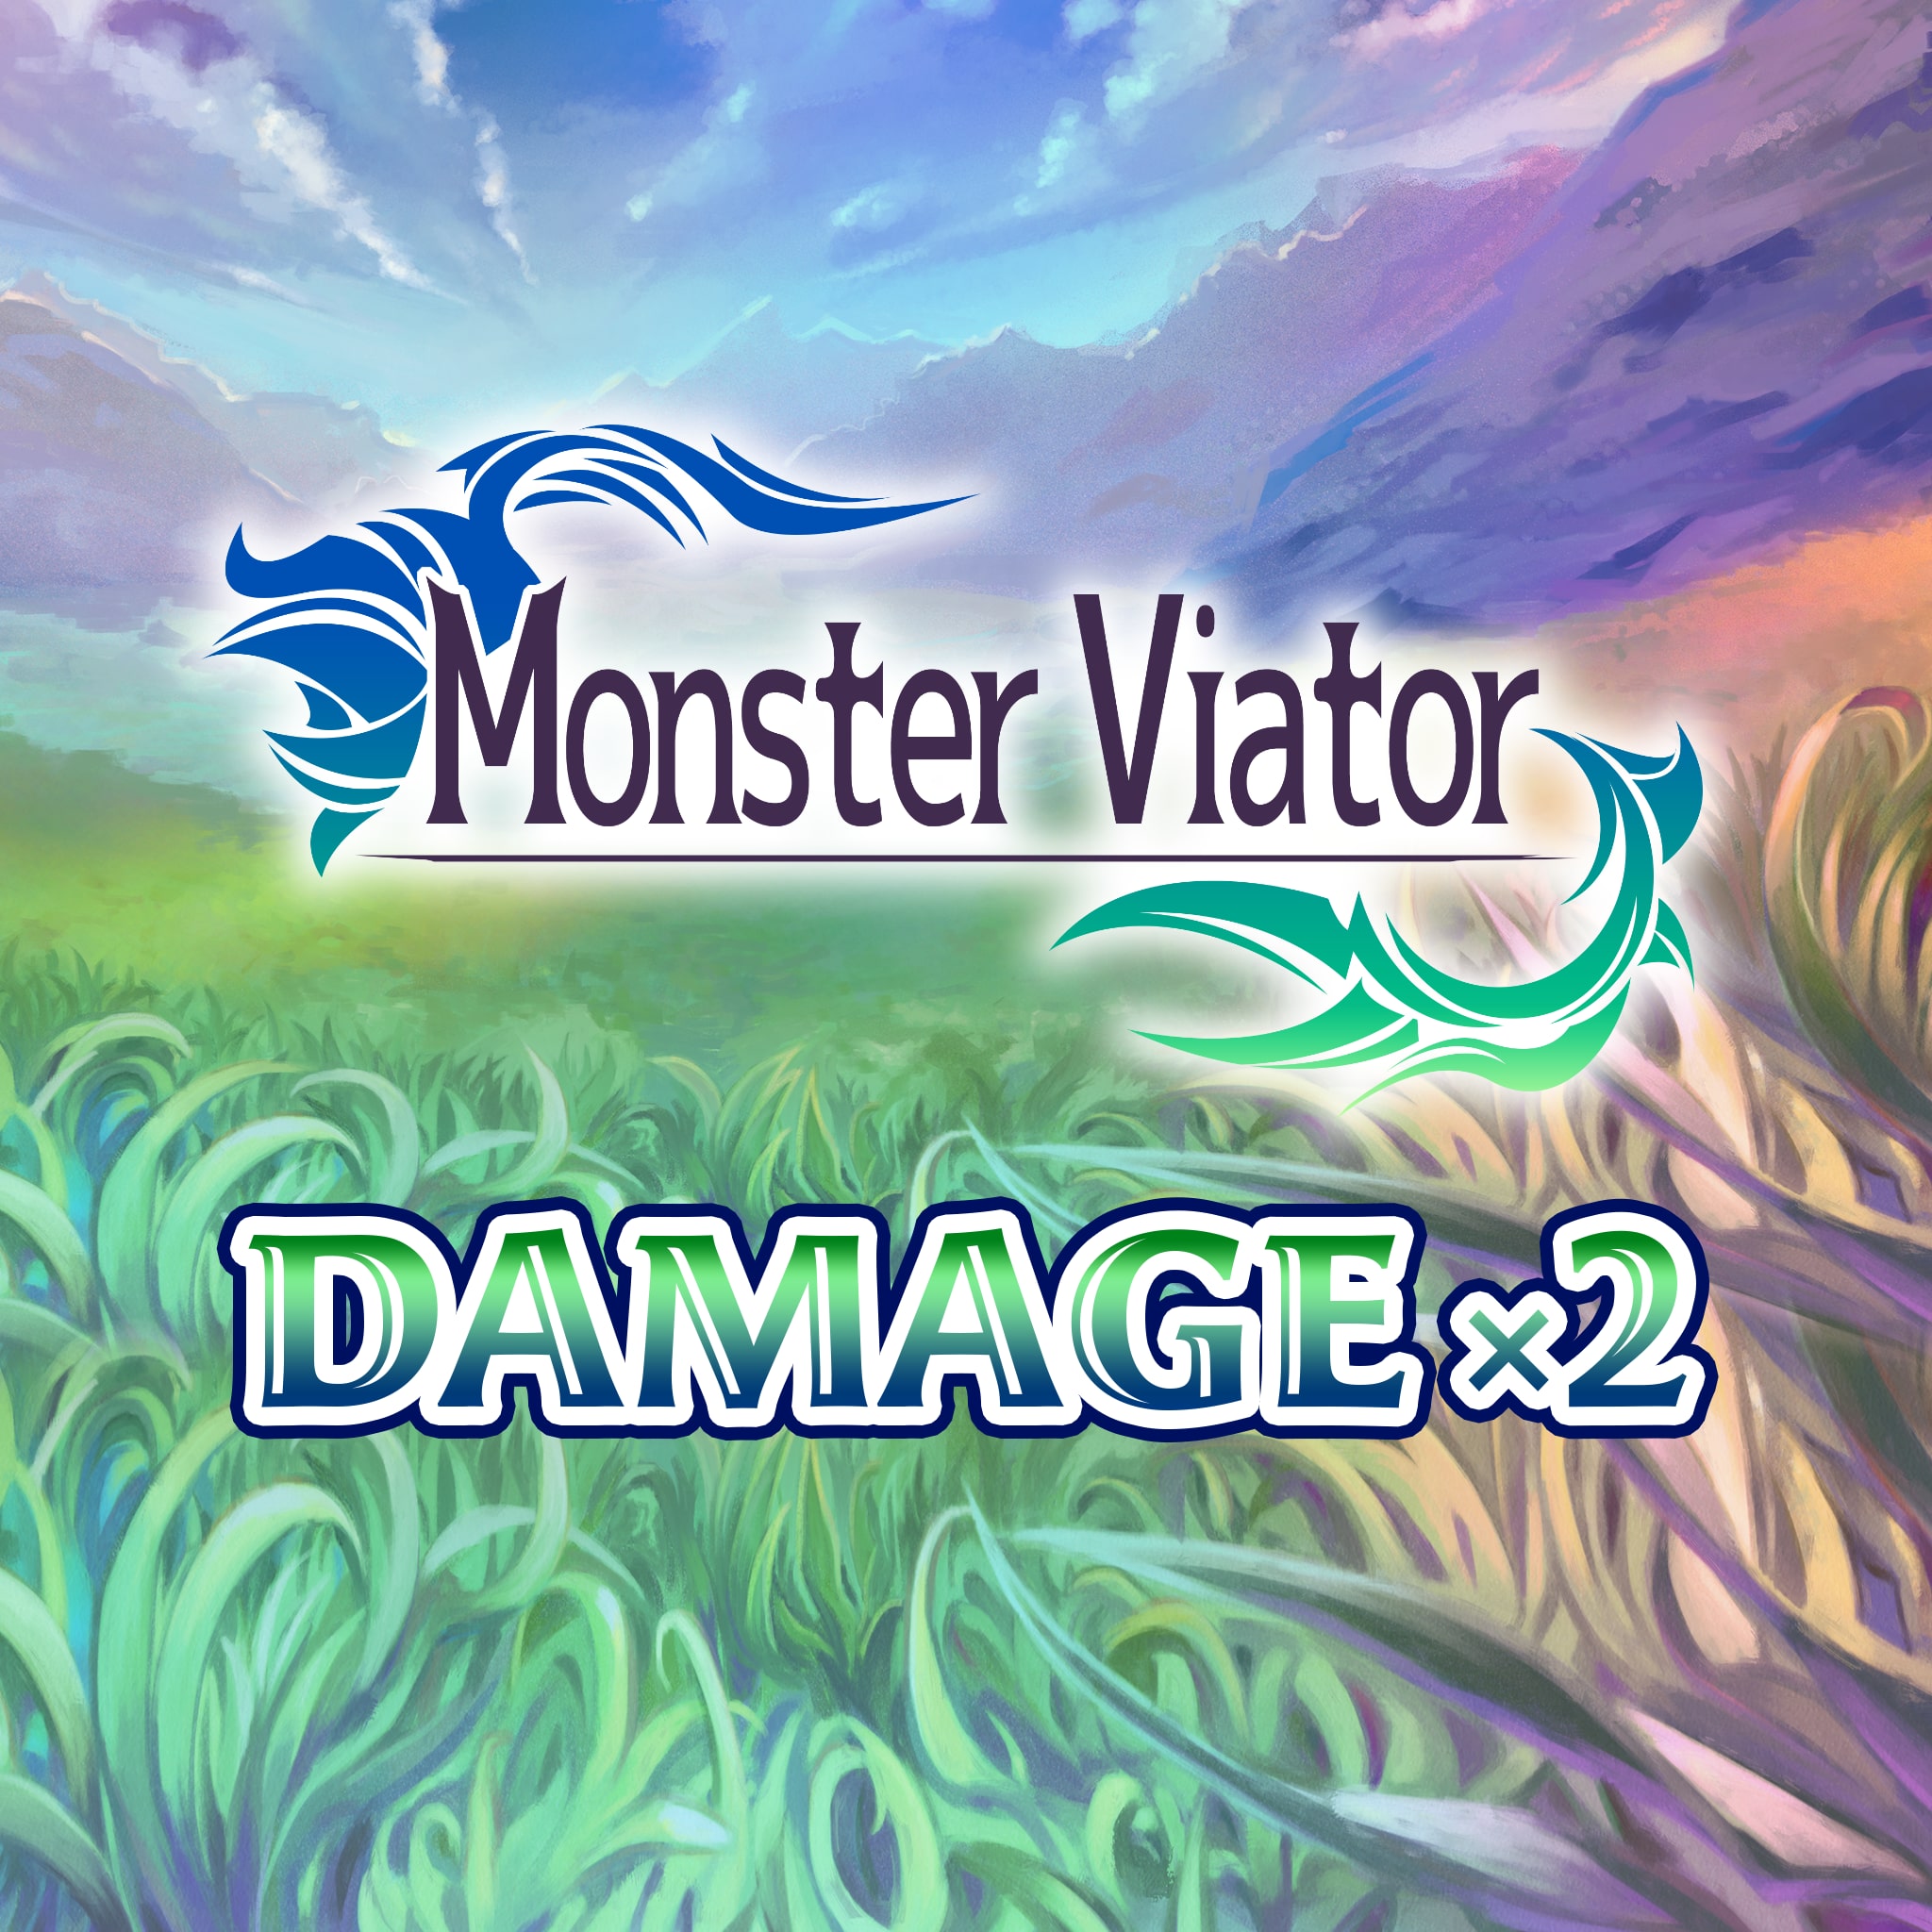 Damage x2 - Monster Viator